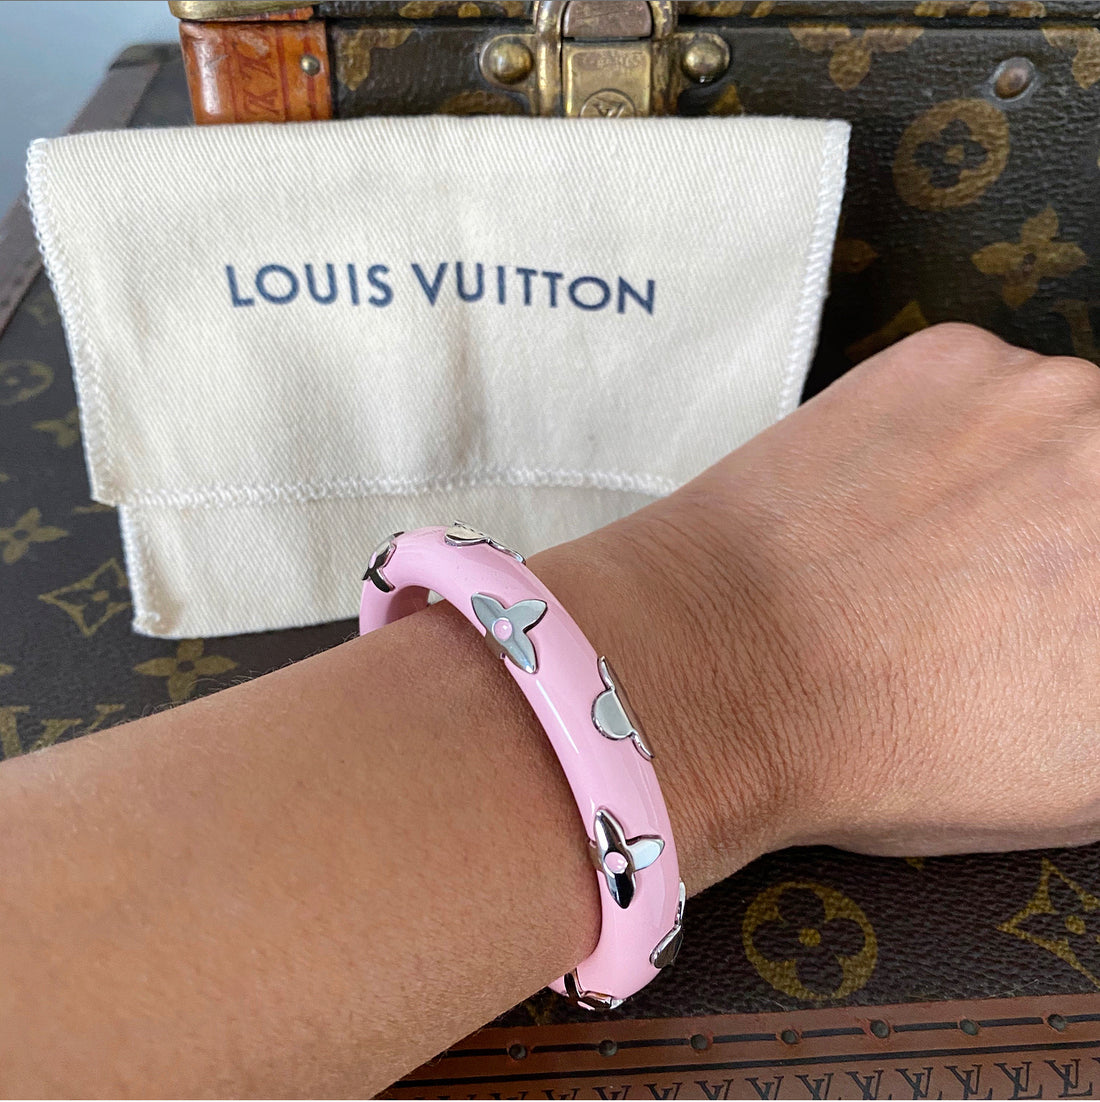 Louis Vuitton Daily Monogram Bracelet in Metallic